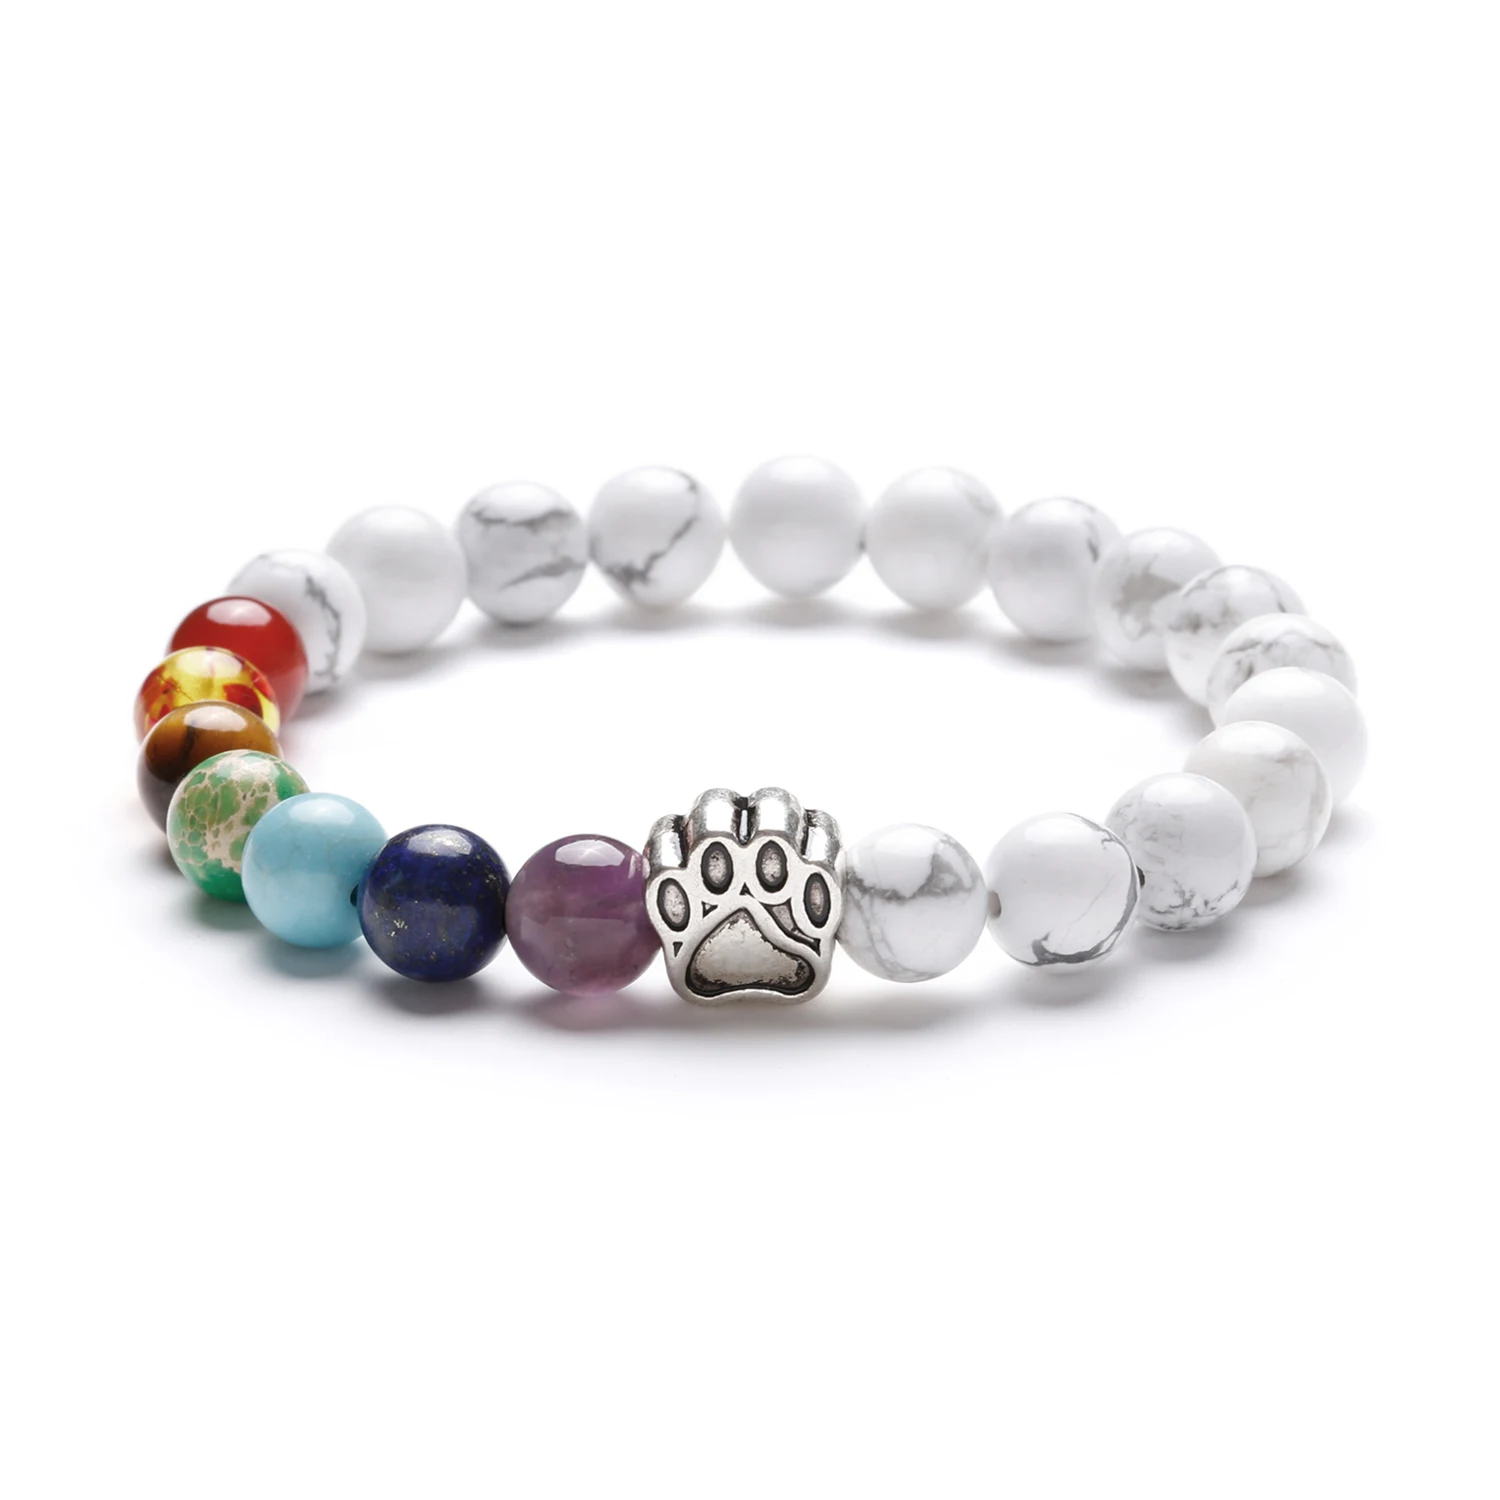 Cute Dog Paw Print Charm Rainbow Chakra Healing 8MM Bead Stretch Bracelet Gifts